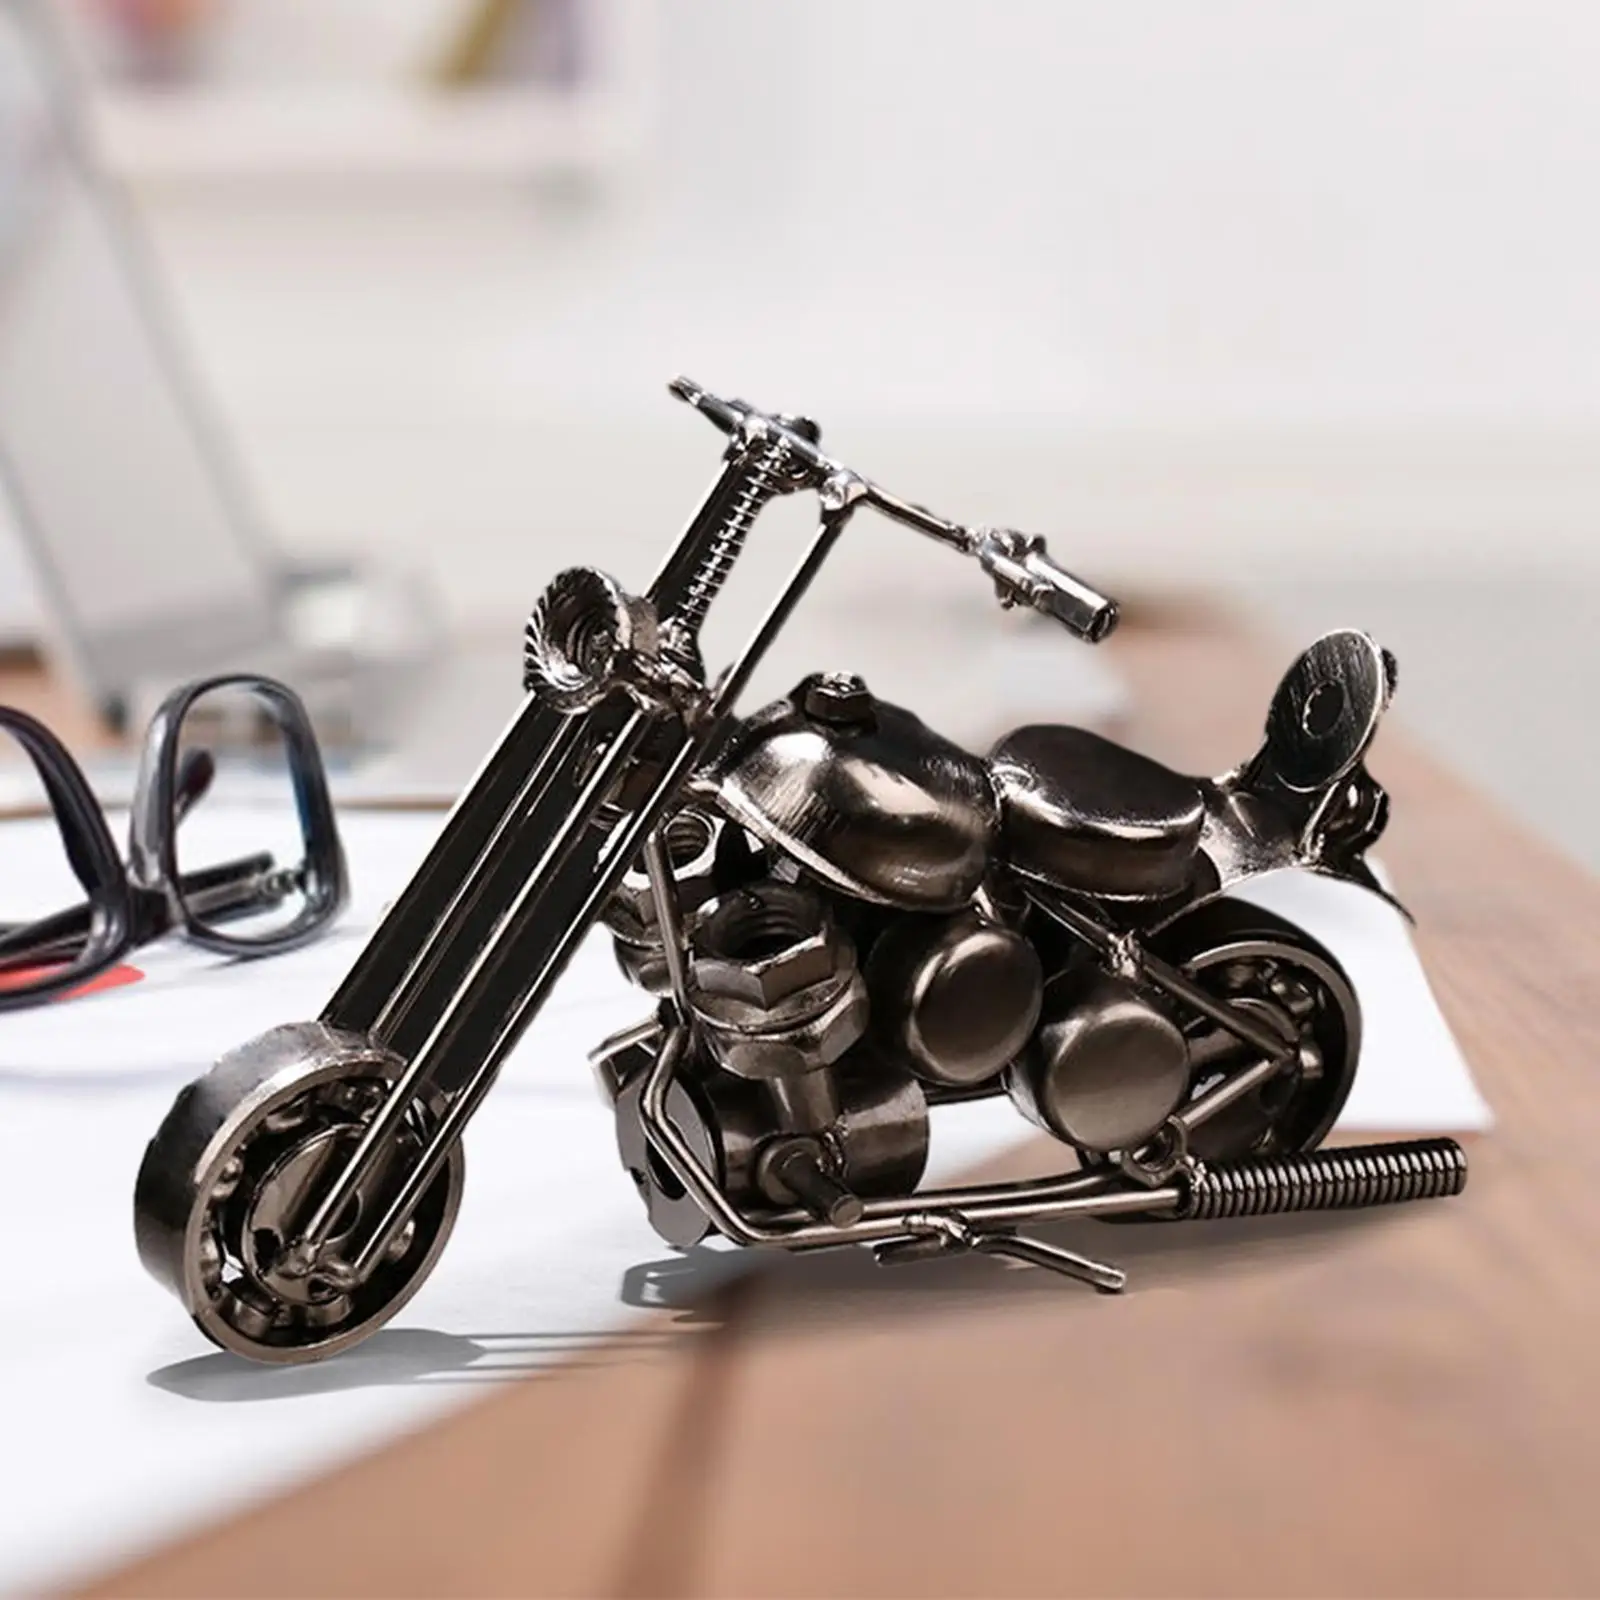 Metal Motorcycle Model Motorbike Figurine Classic Birthday Gift Decoration